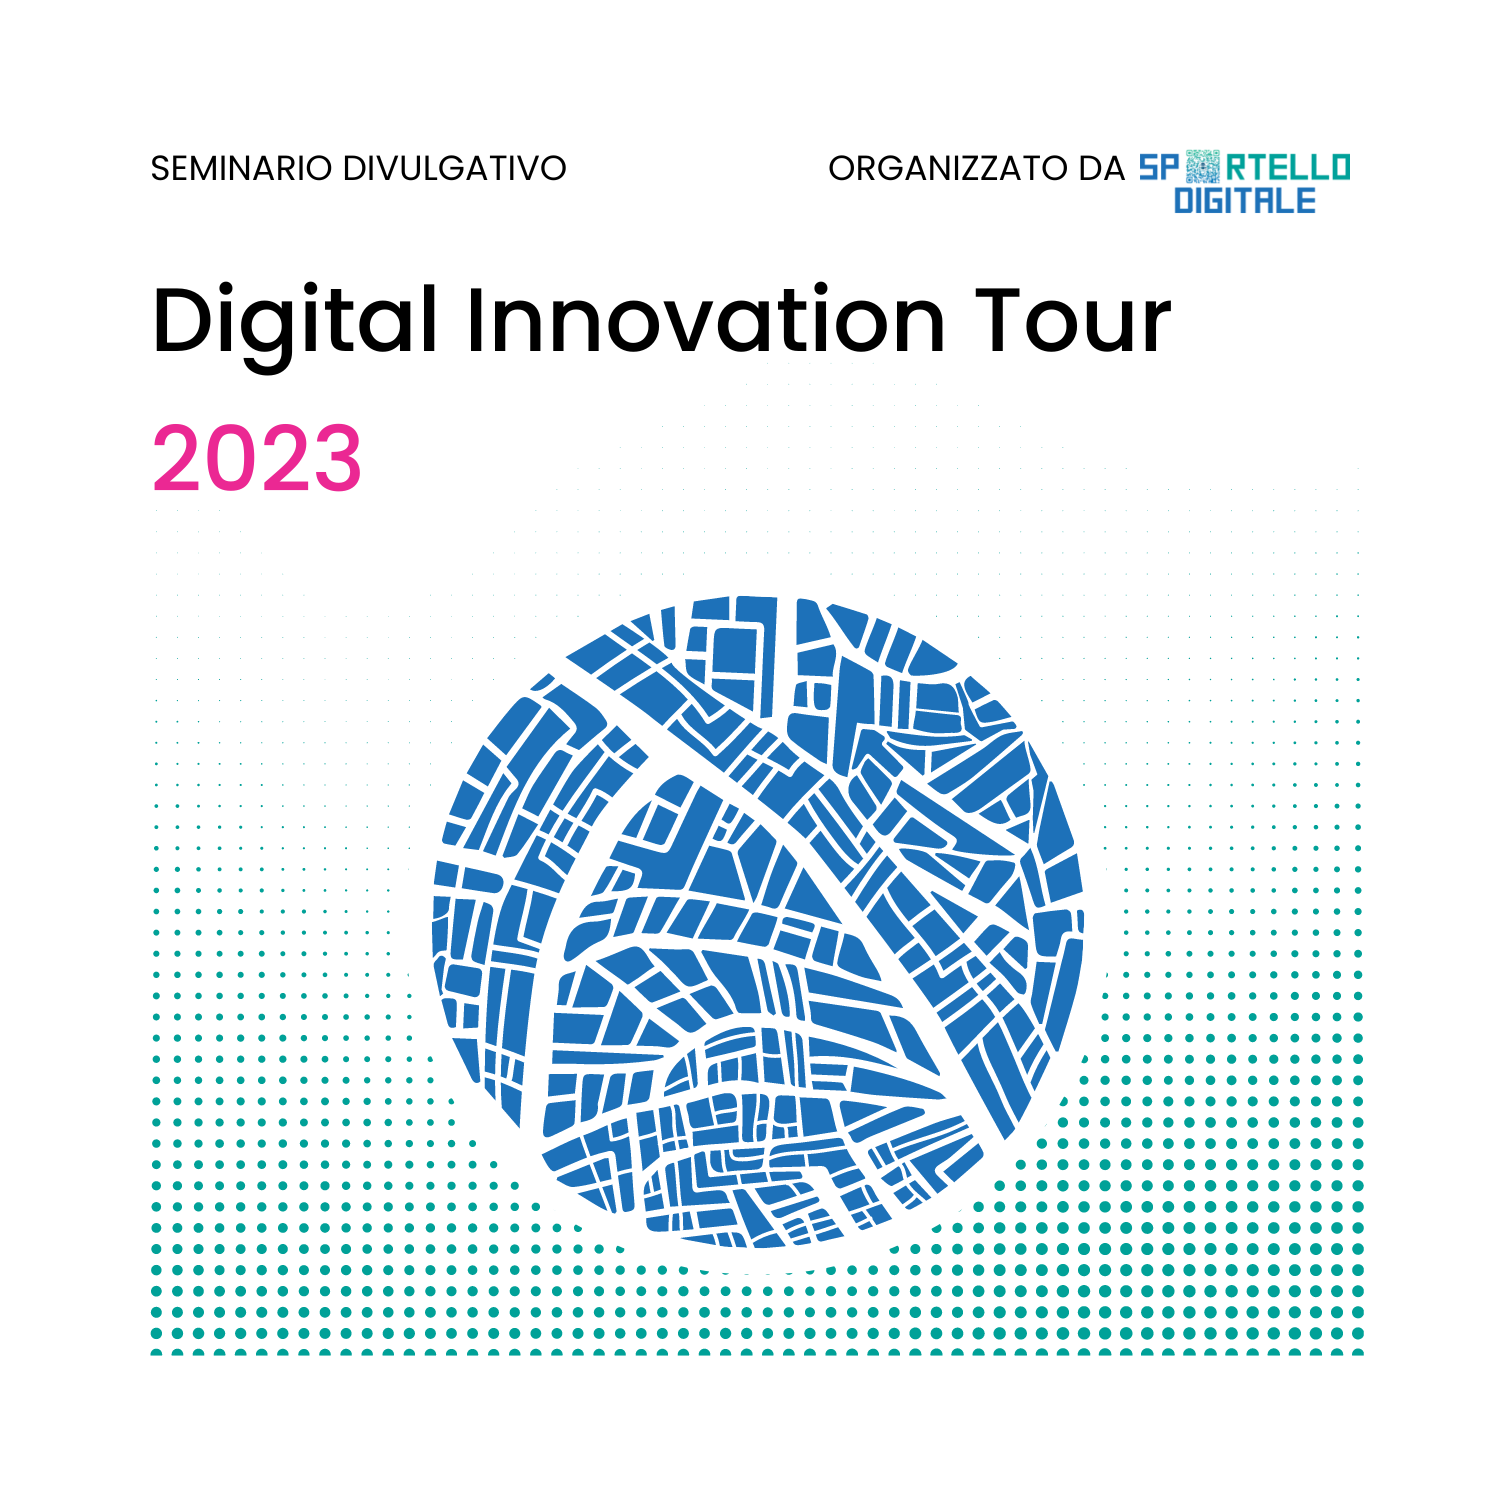 digital innovation tour 2023 - Sportello Digitale - logo dei nostri seminari